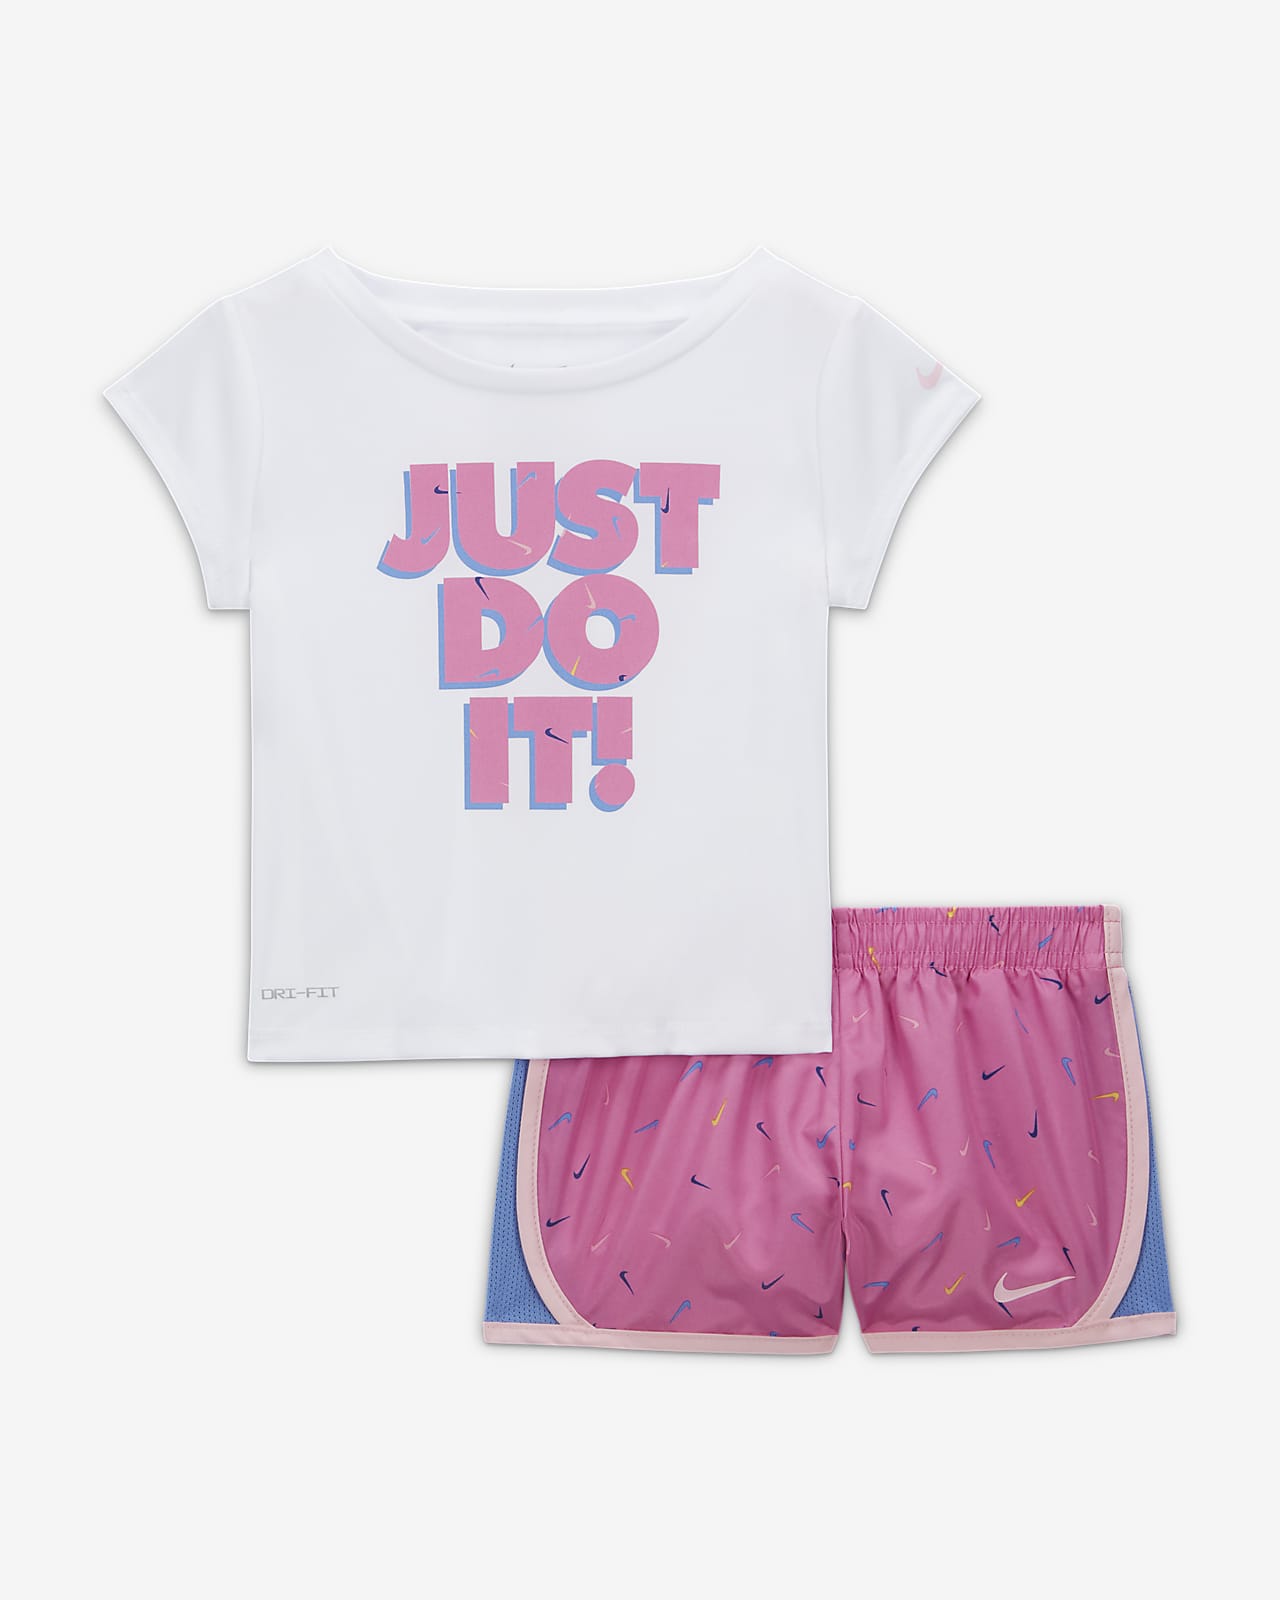 Women's Nike Short Set | Closet Keeps